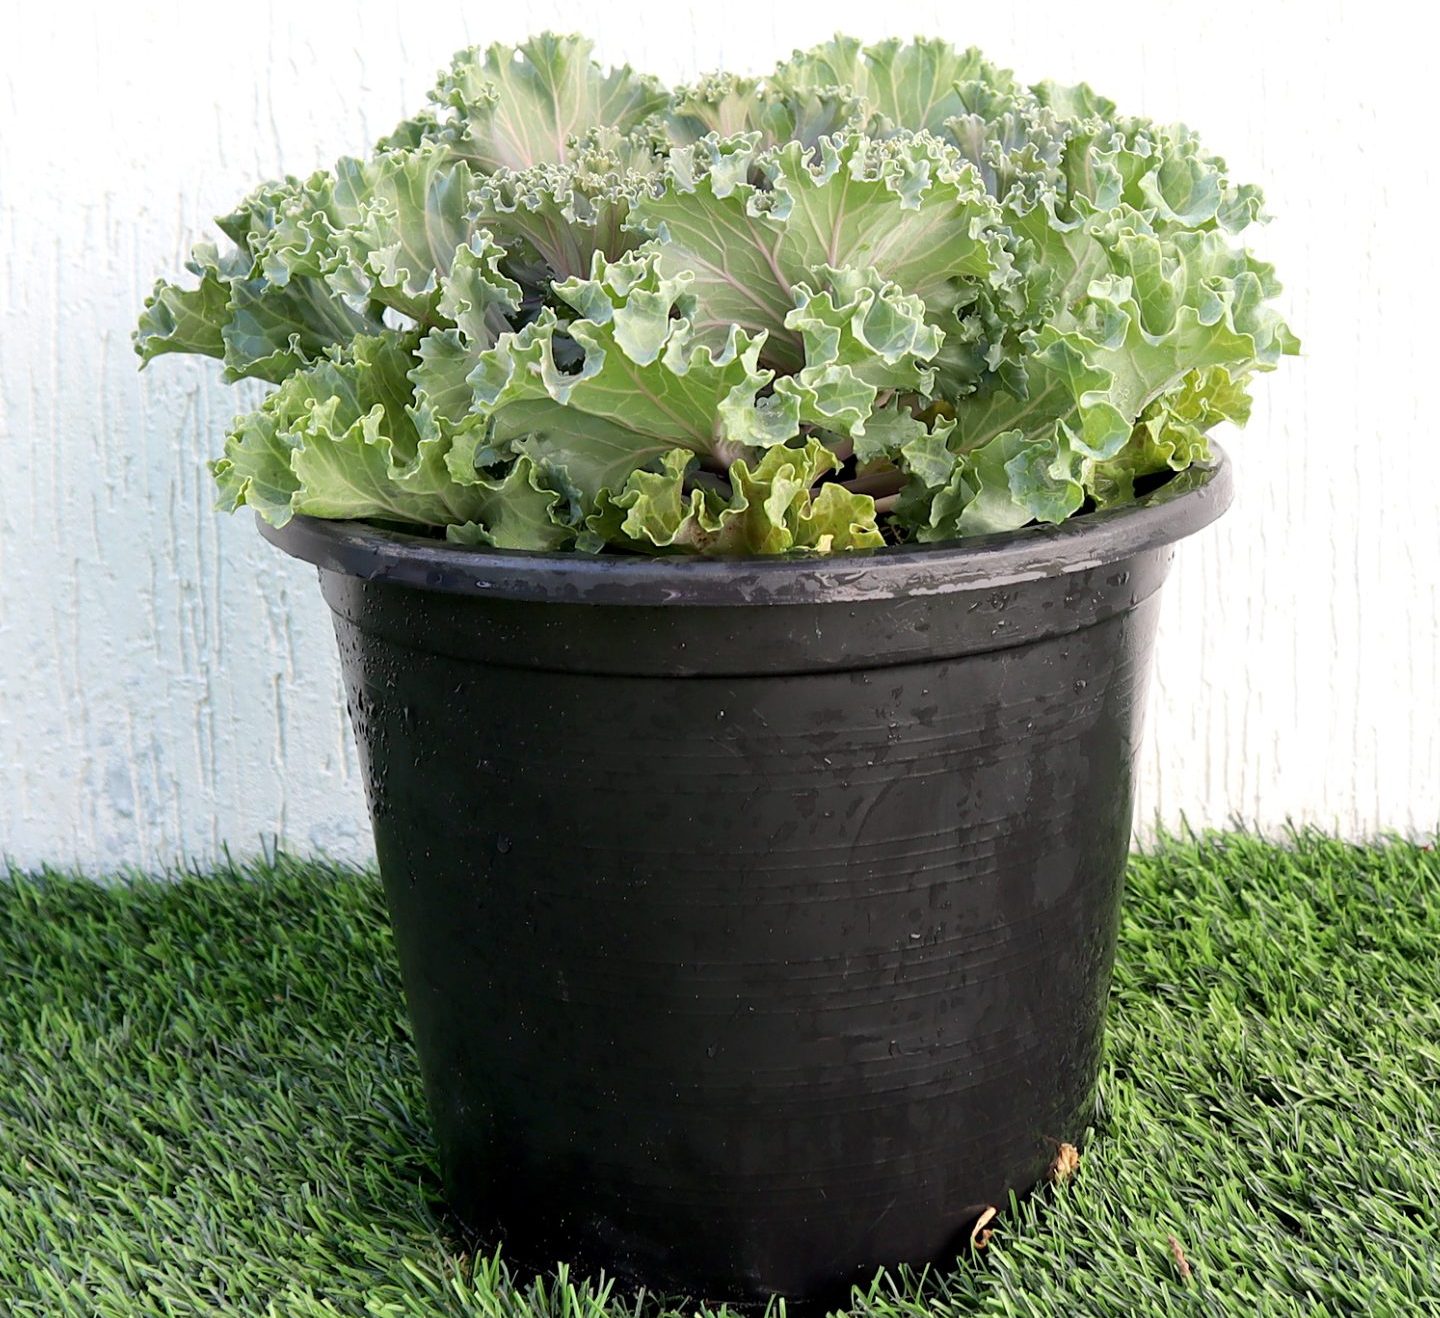 Ornamental Kale "Brassica oleracea"